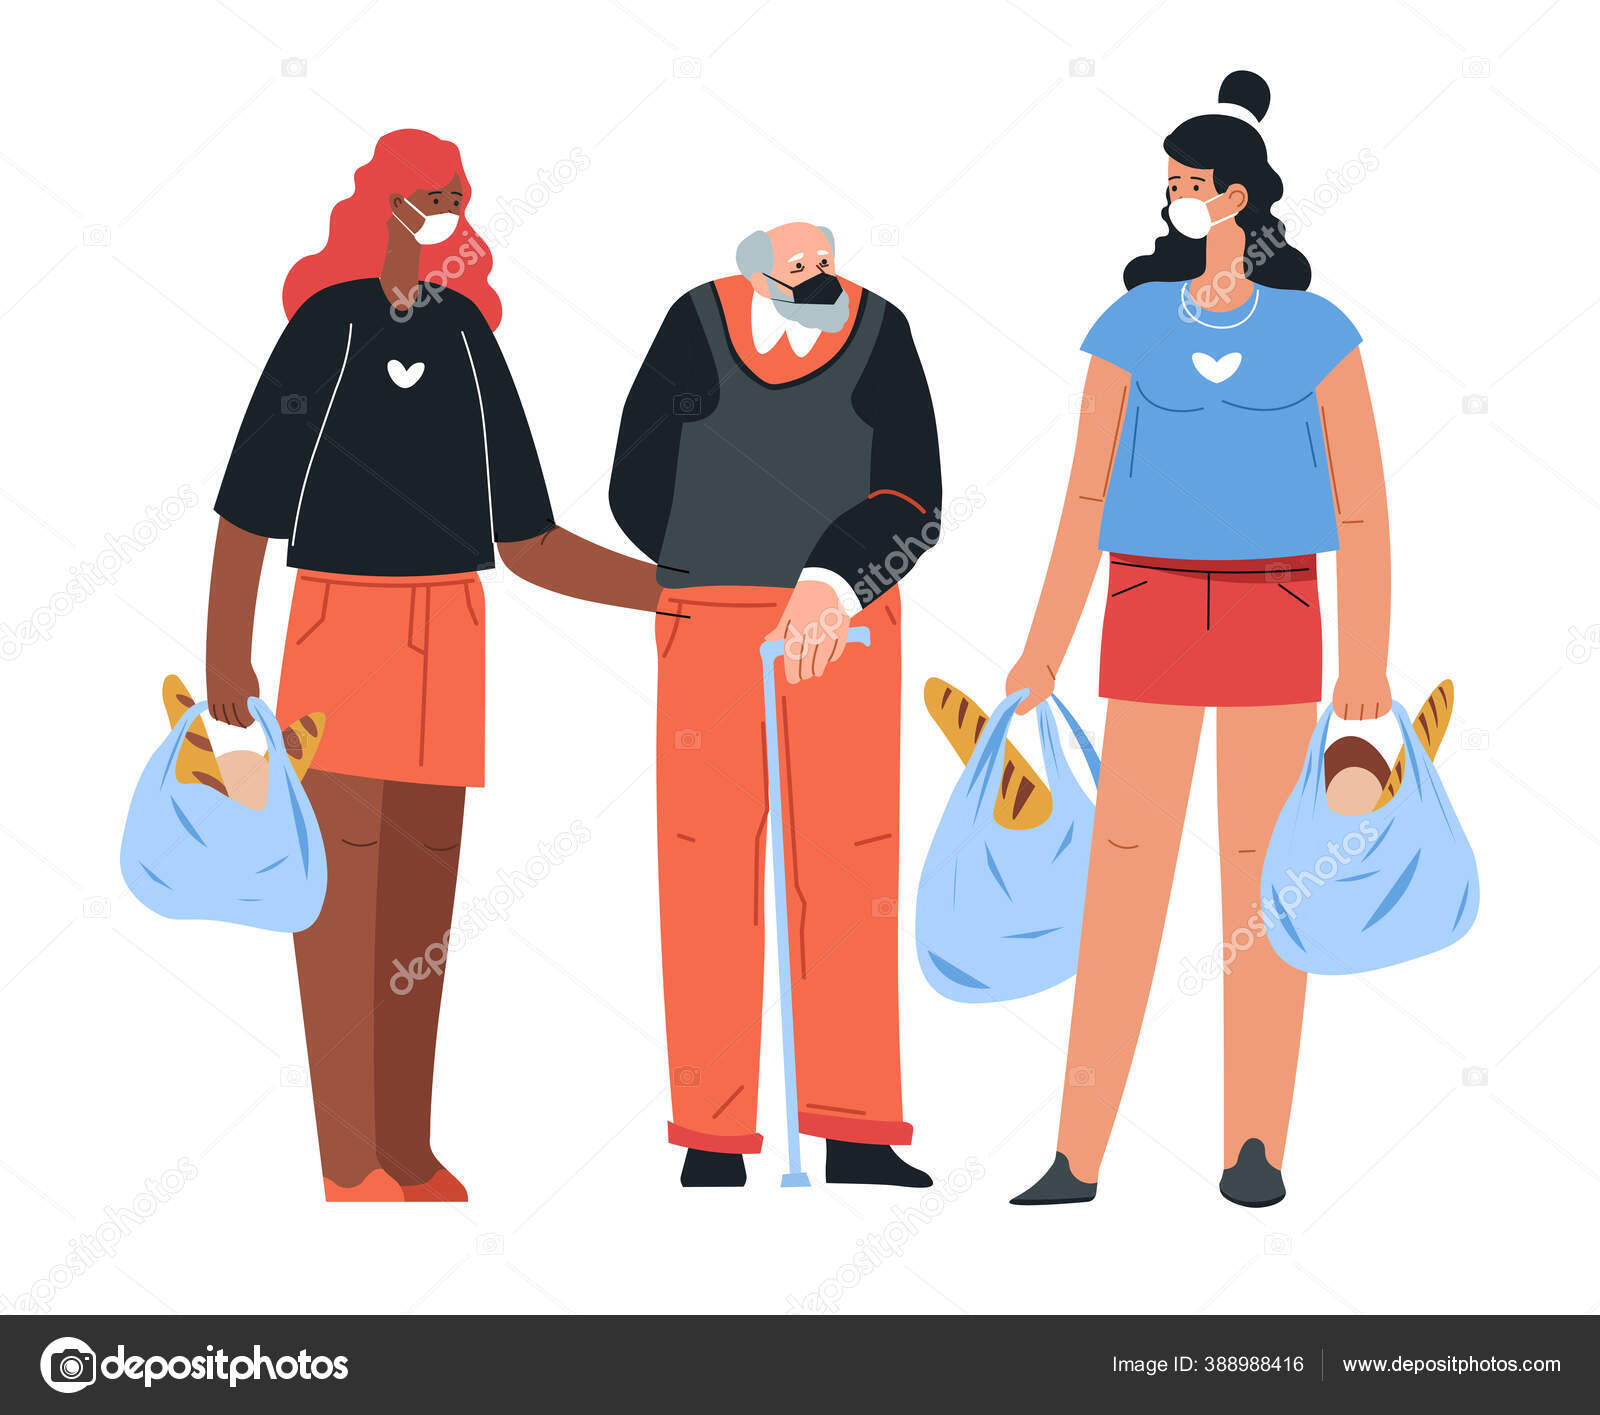 Store - HELP BAG